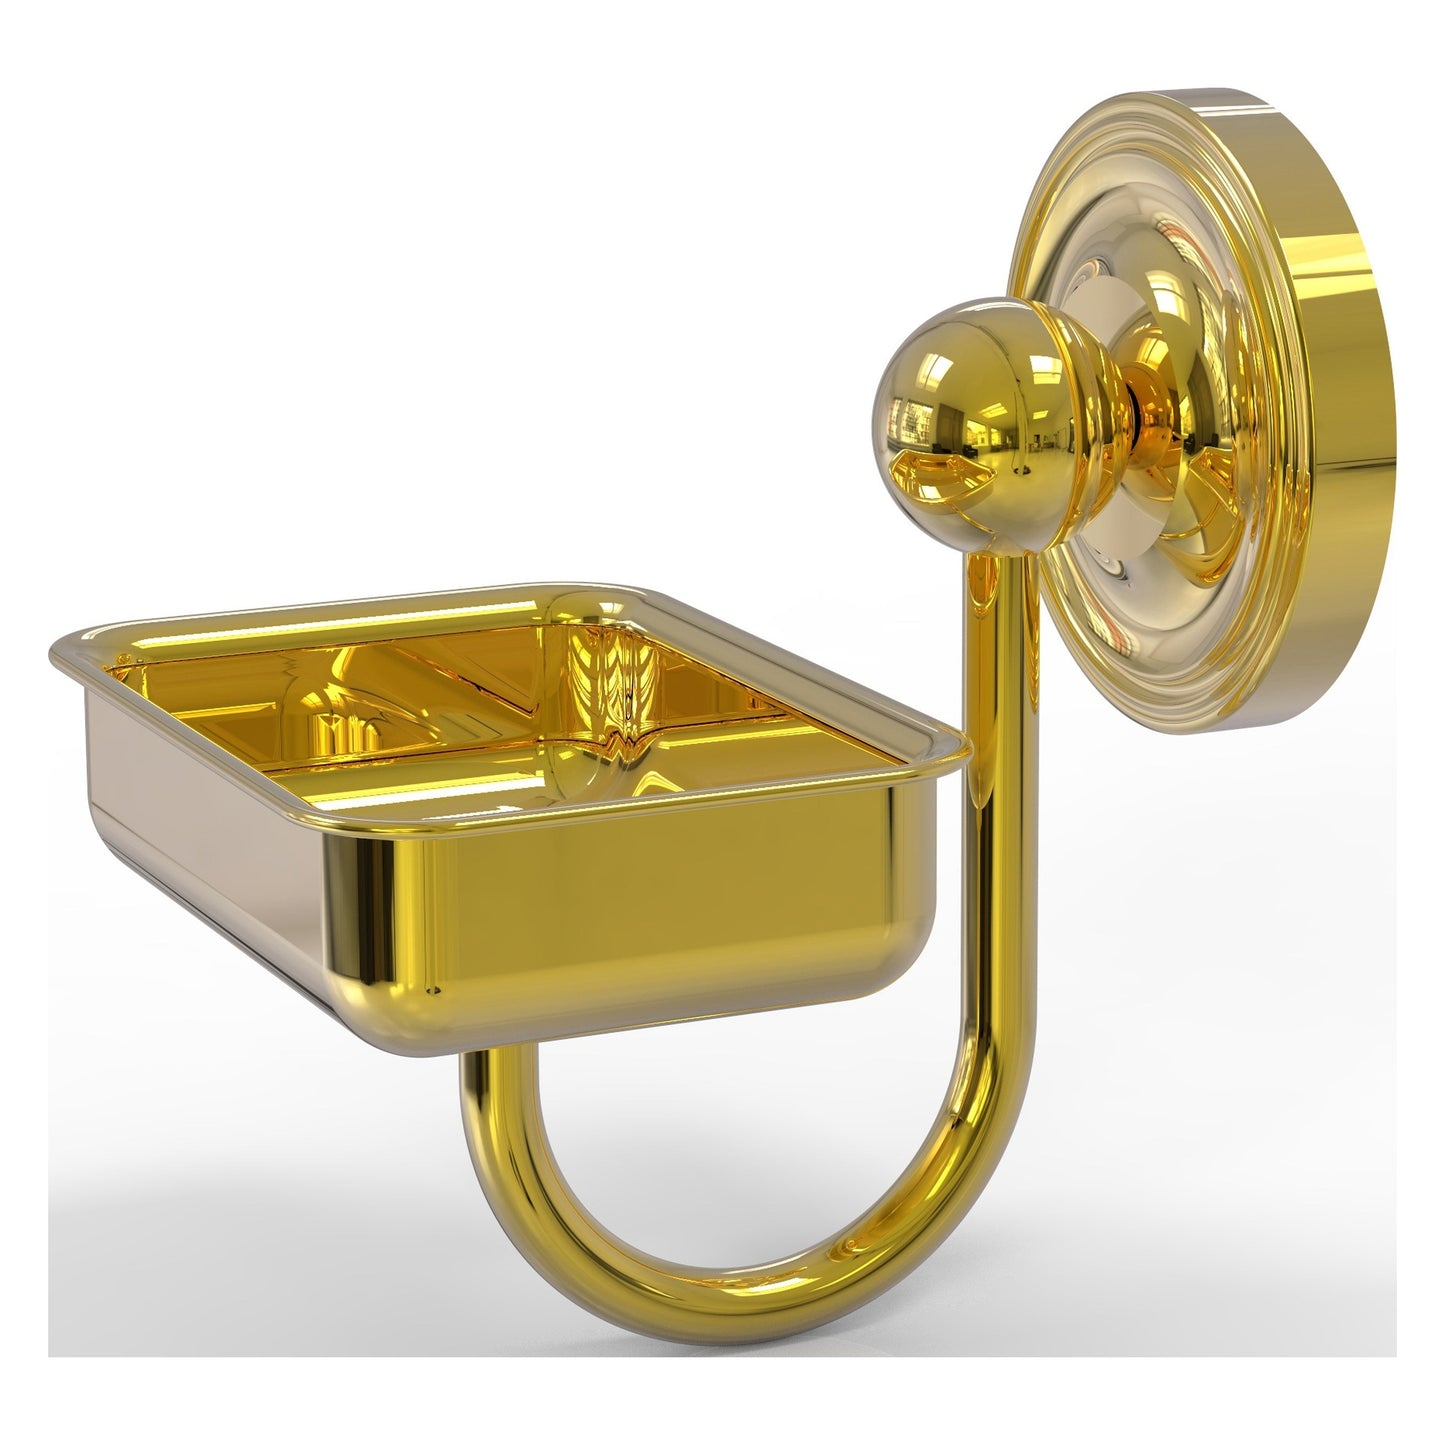 Allied Brass Prestige Regal 4.5" x 3.5" Polished Brass Solid Brass Wall-Mounted Soap Dish